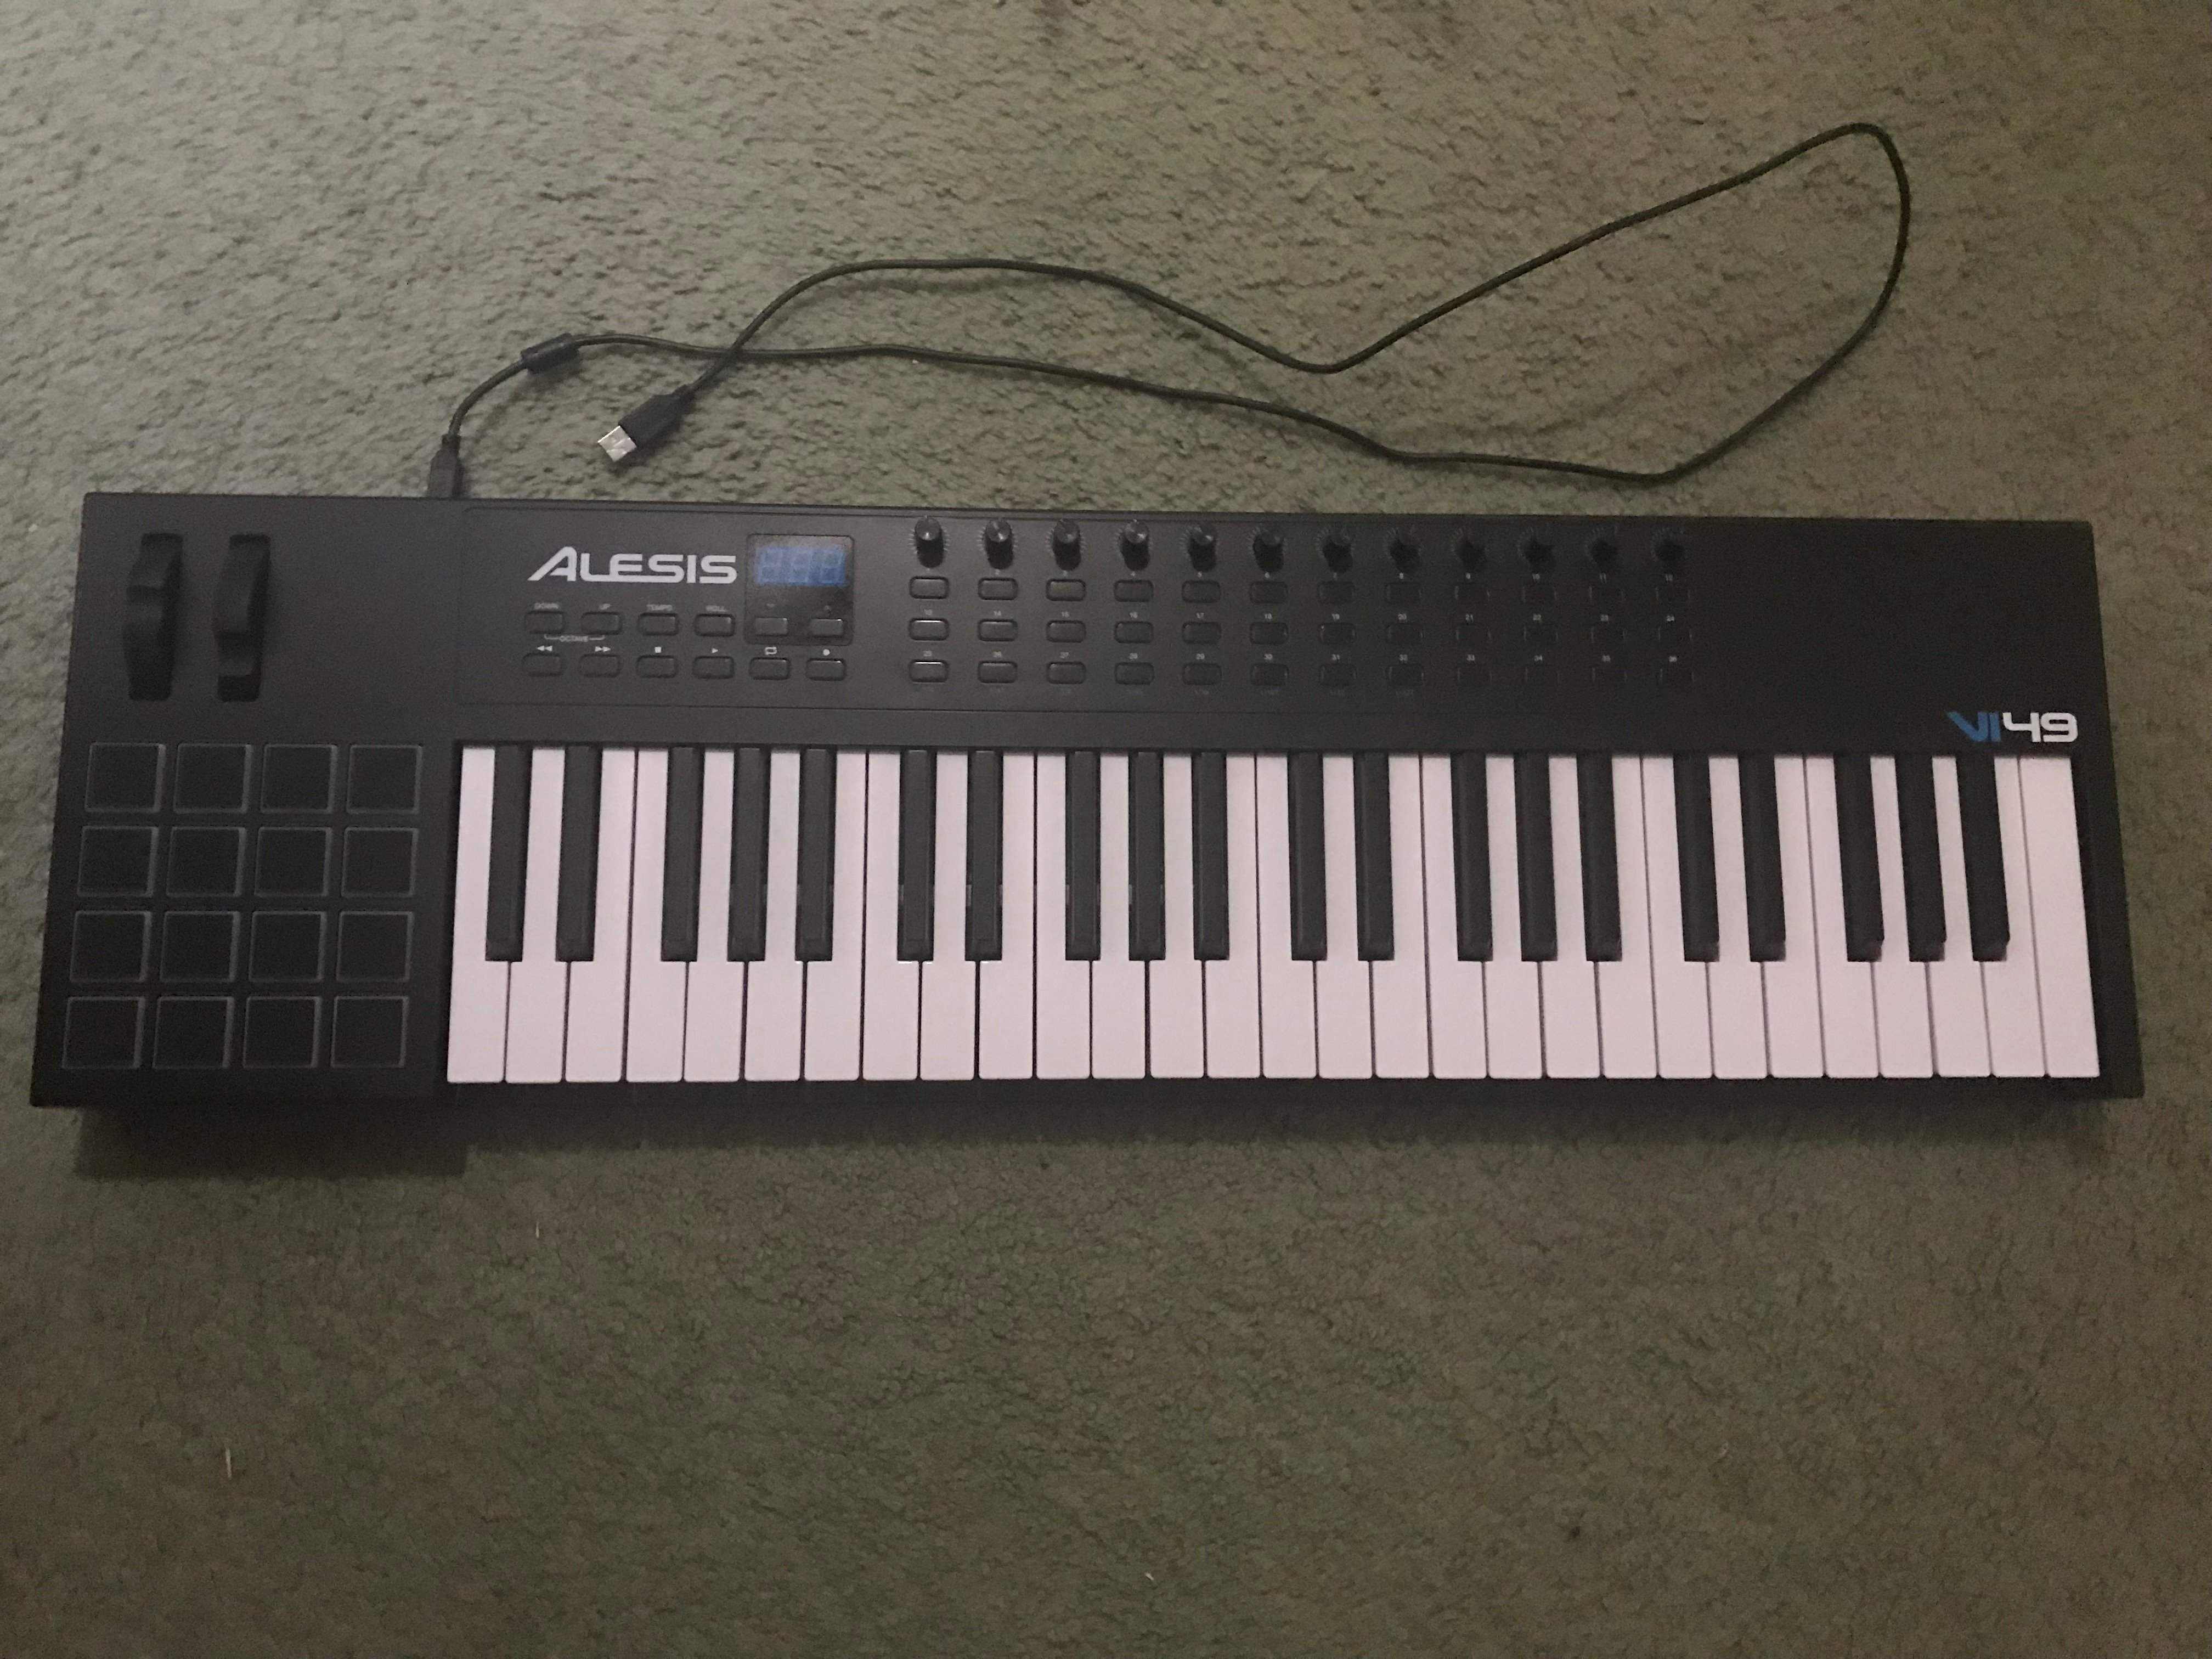 MIDI keyboard - Alesis VI49